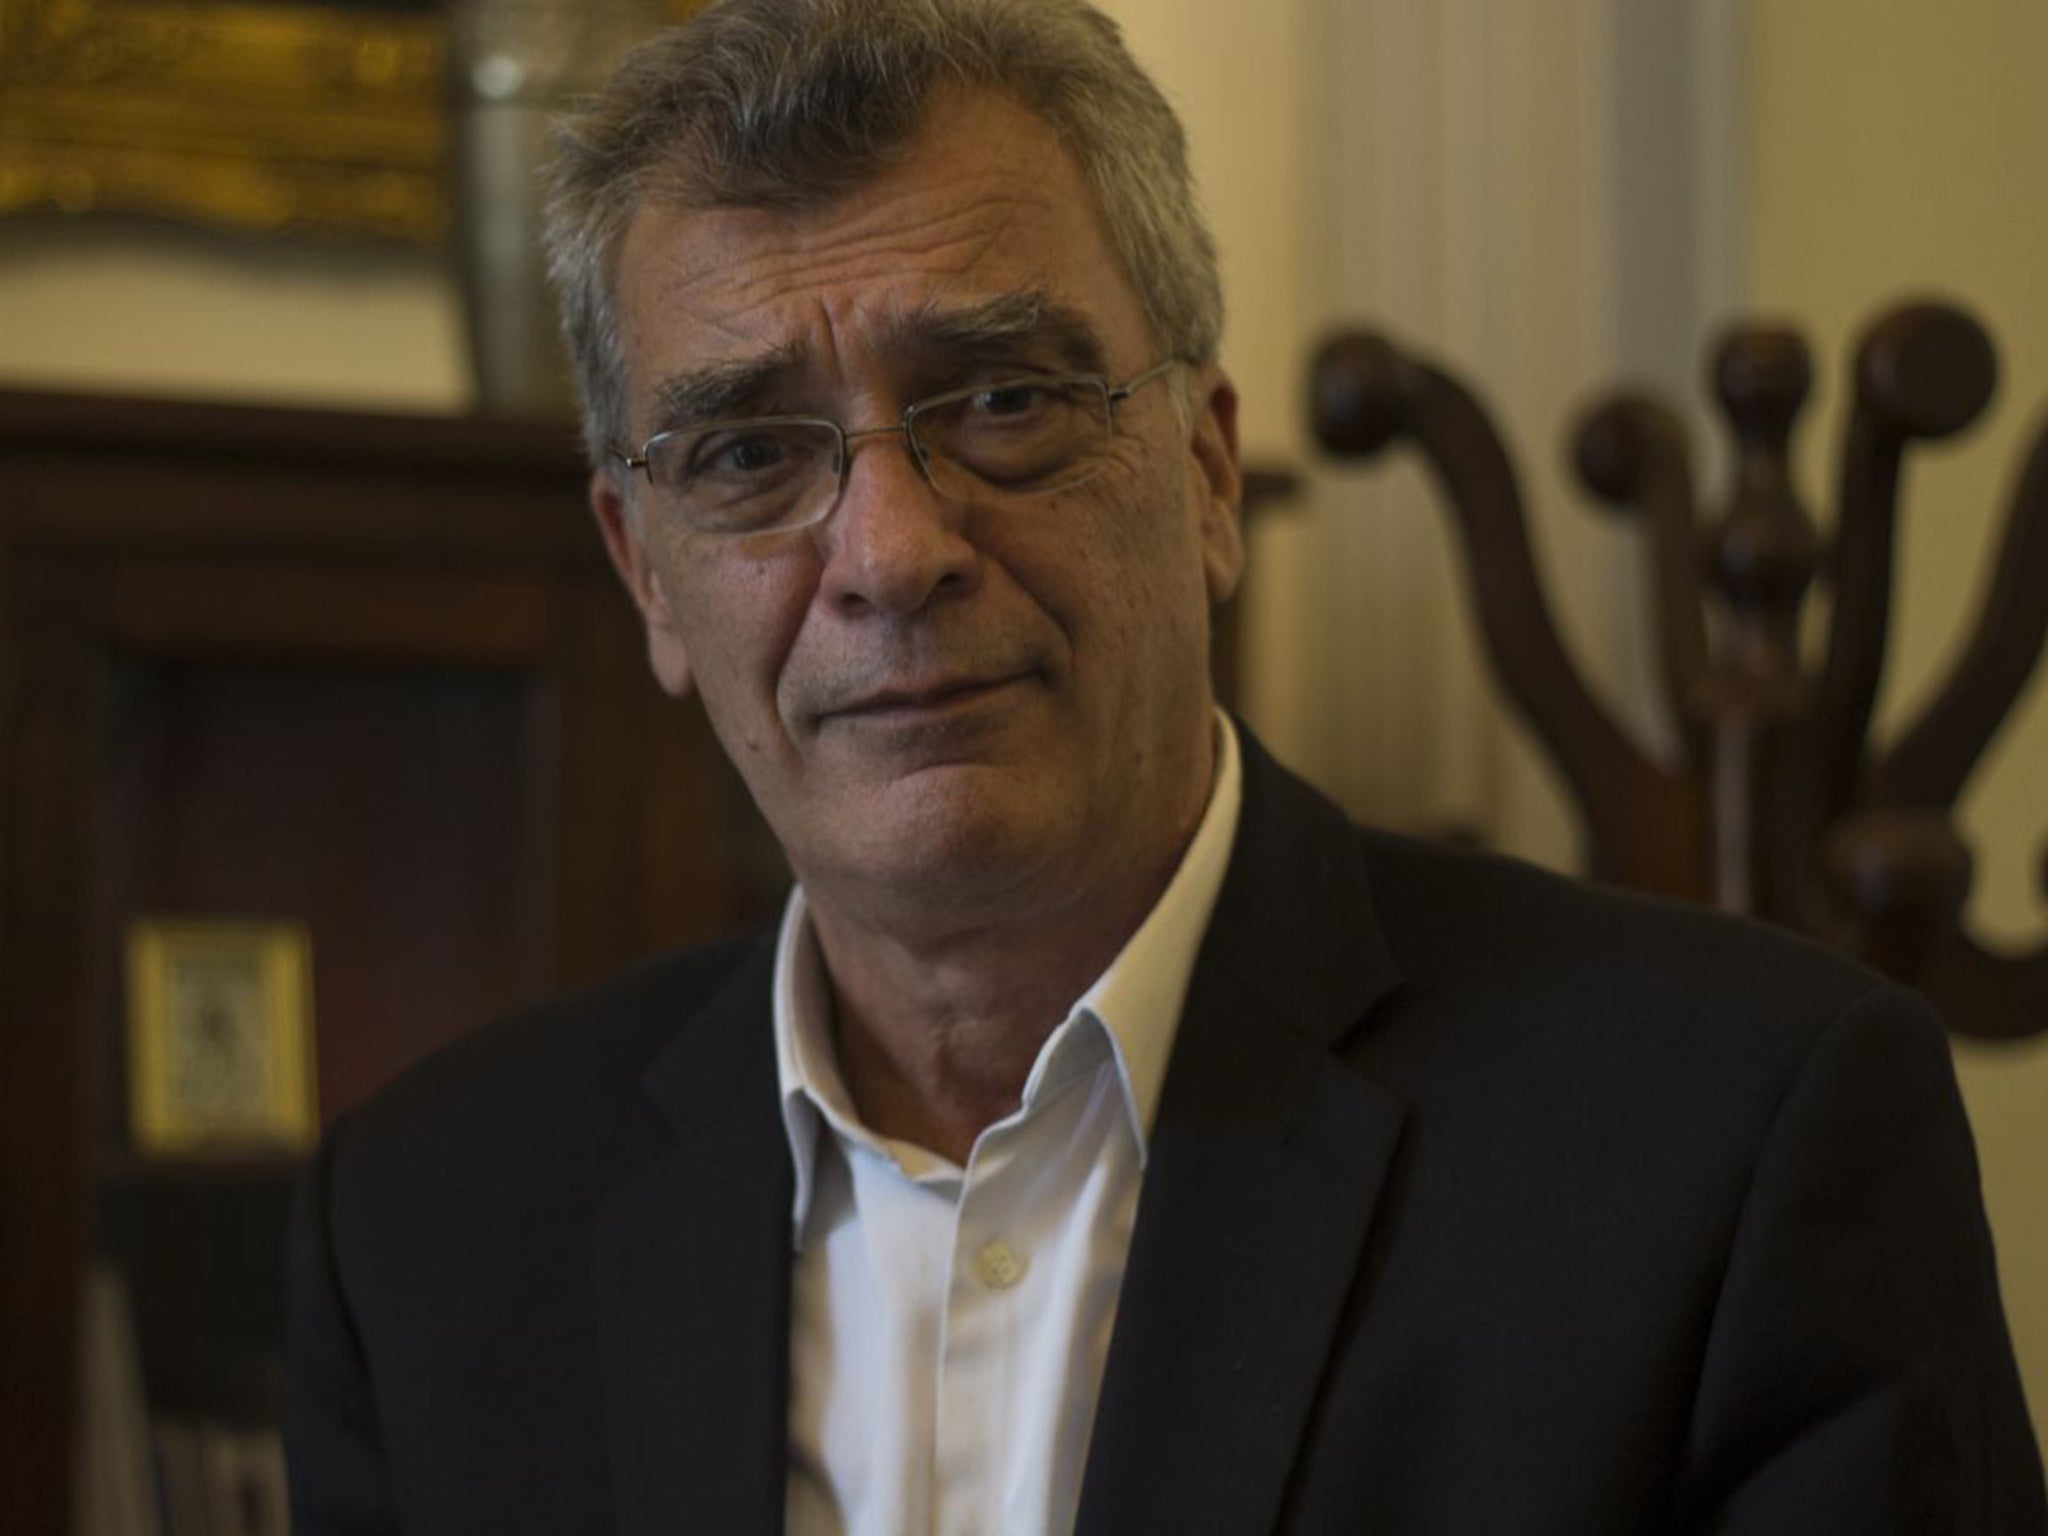 Spyridon Galinos has urged EU leaders to help in the refugee crisis